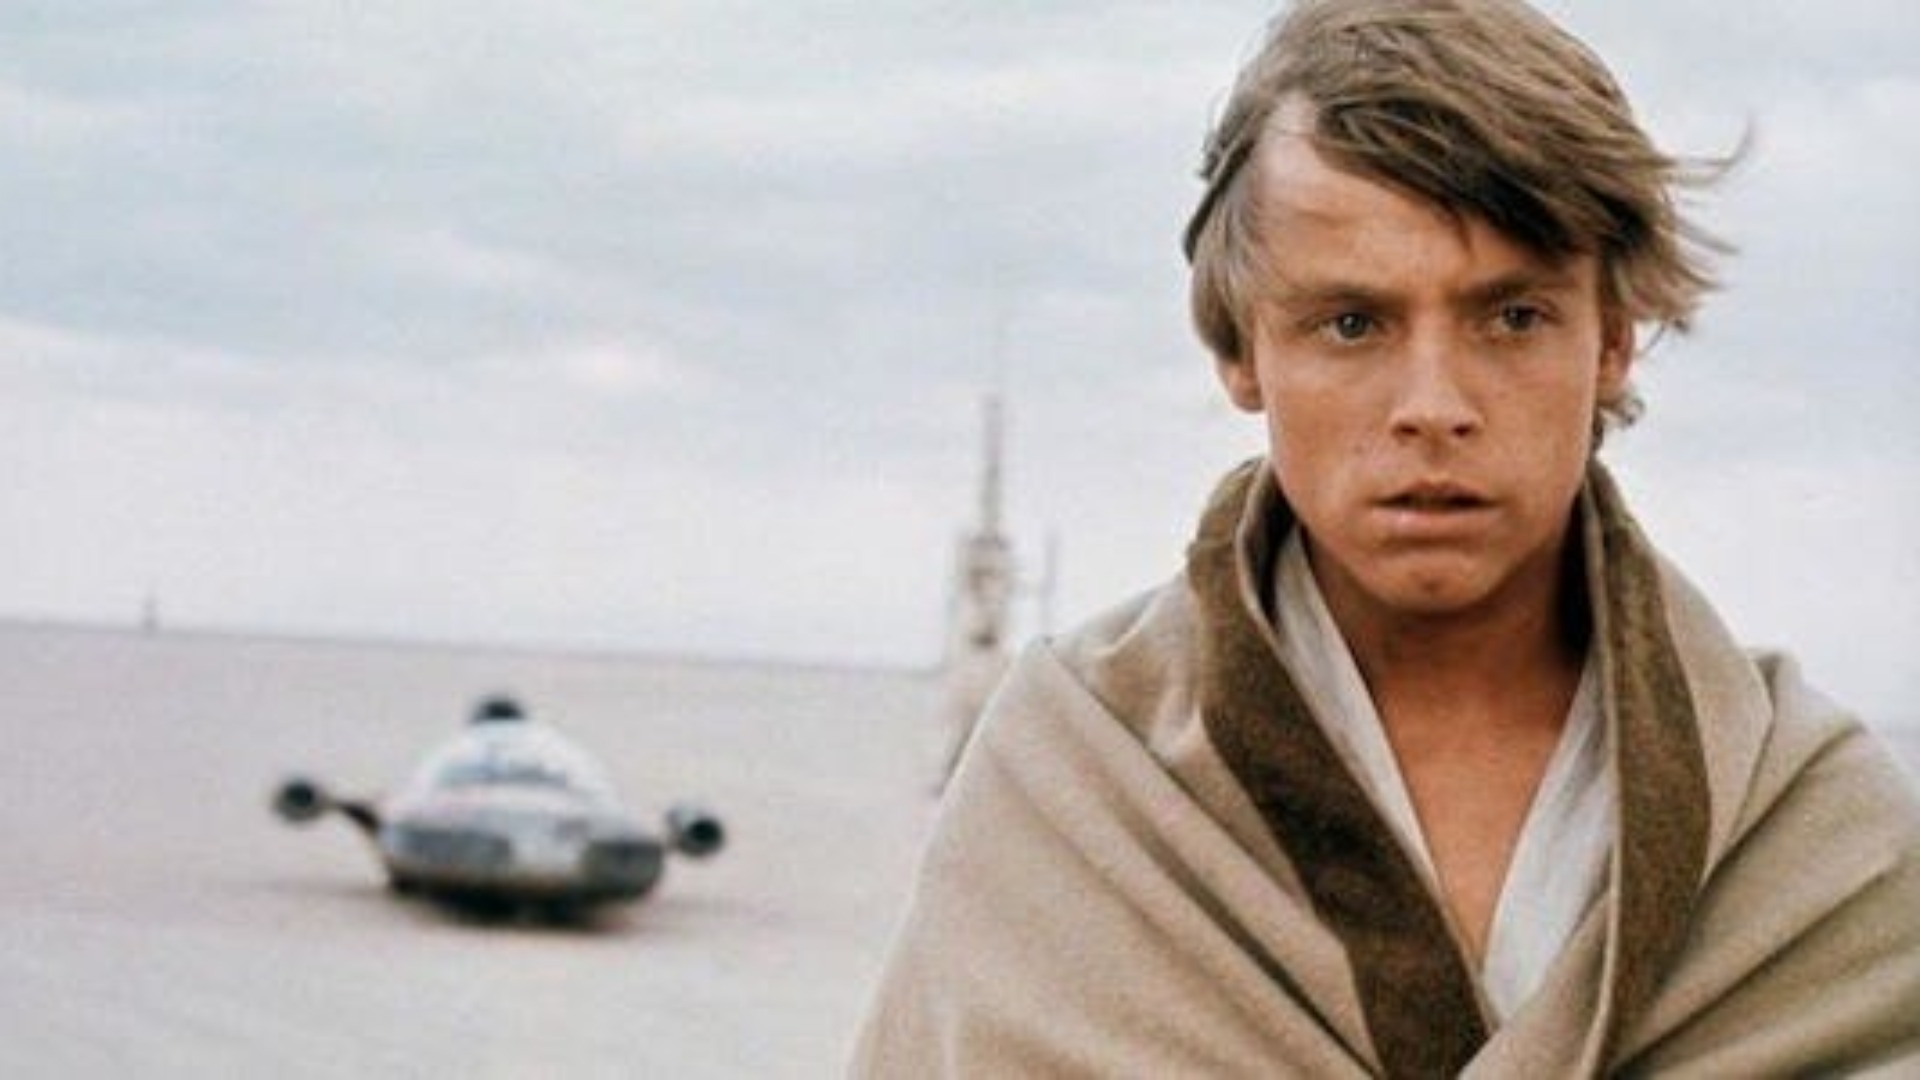 Star Wars deleted scene 'covered up' Mark Hamill car crash scars